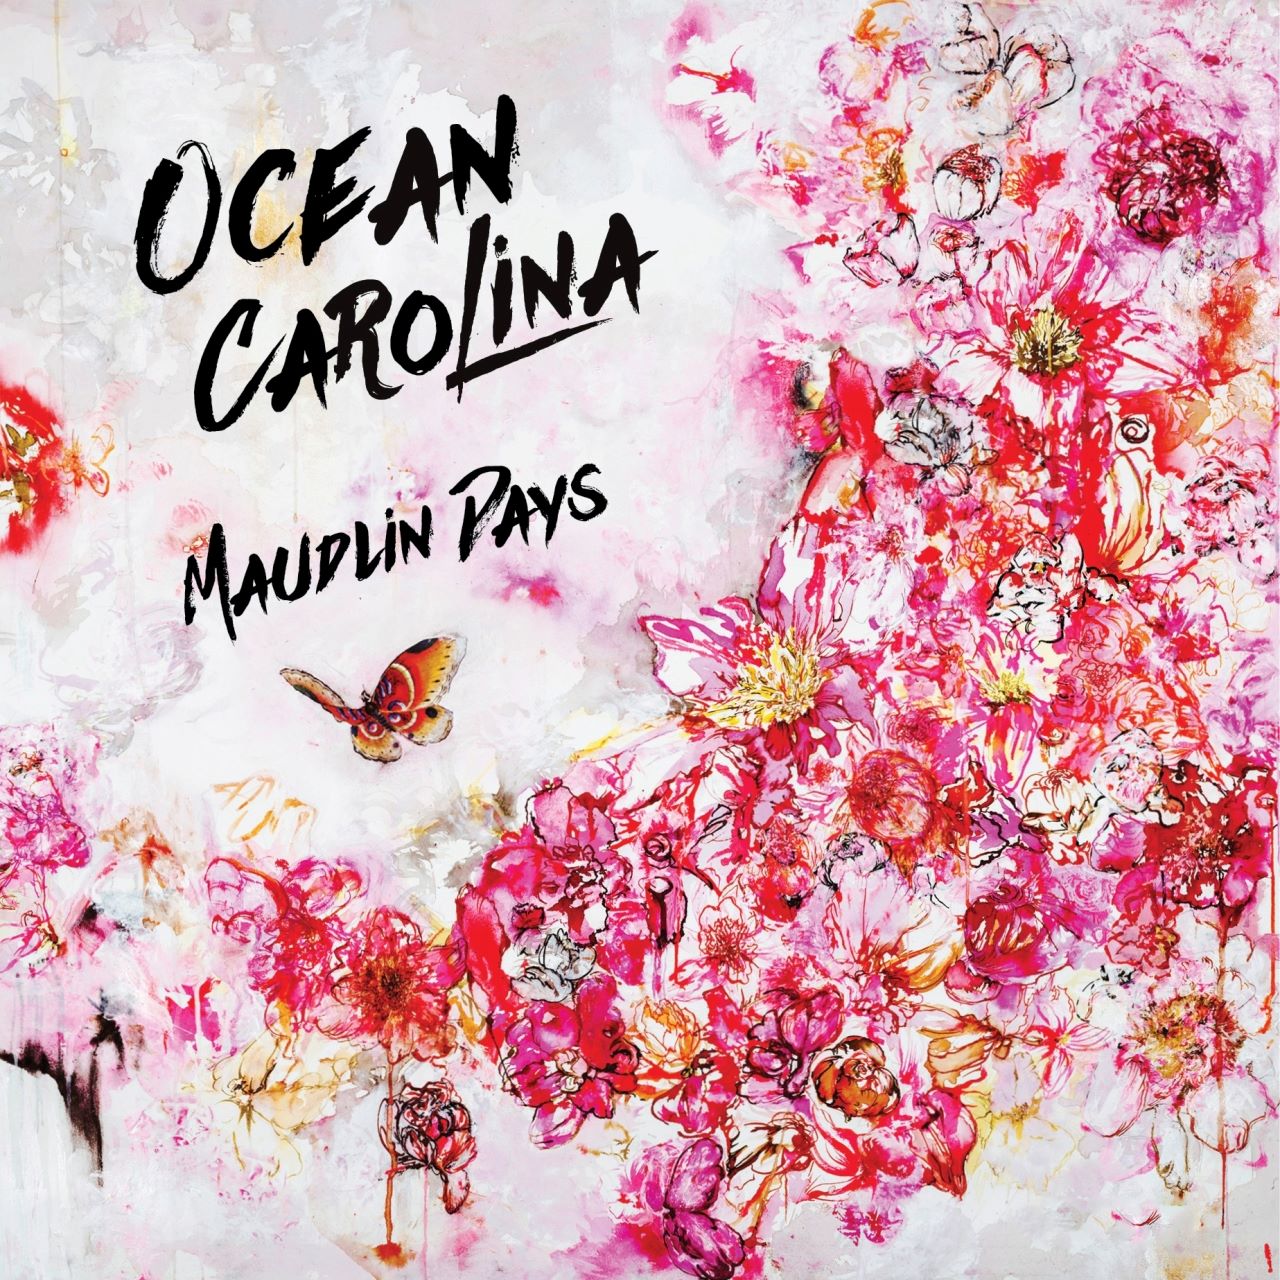 Ocean Carolina - Maudlin Days cover album